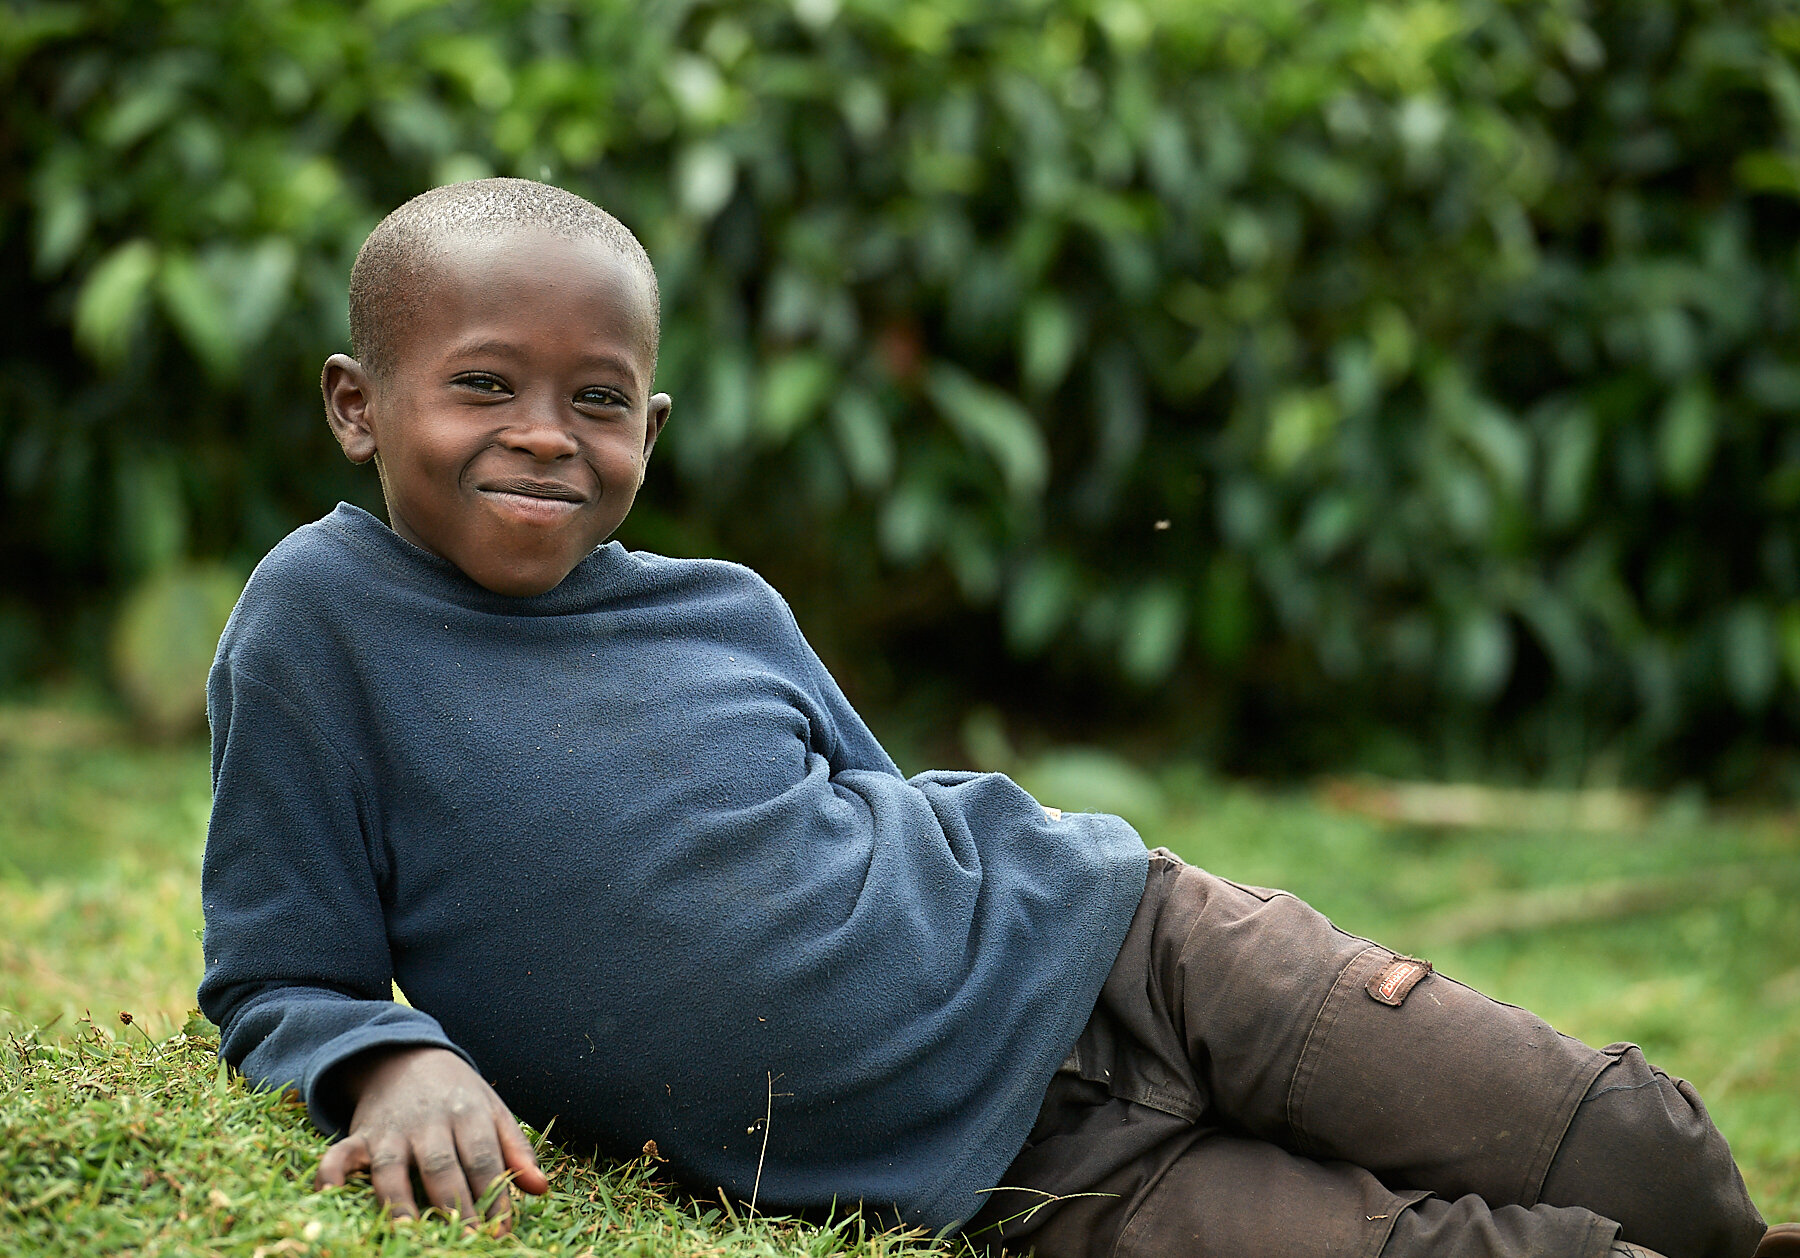 Young Kenyan, ready for his next Gap ad!